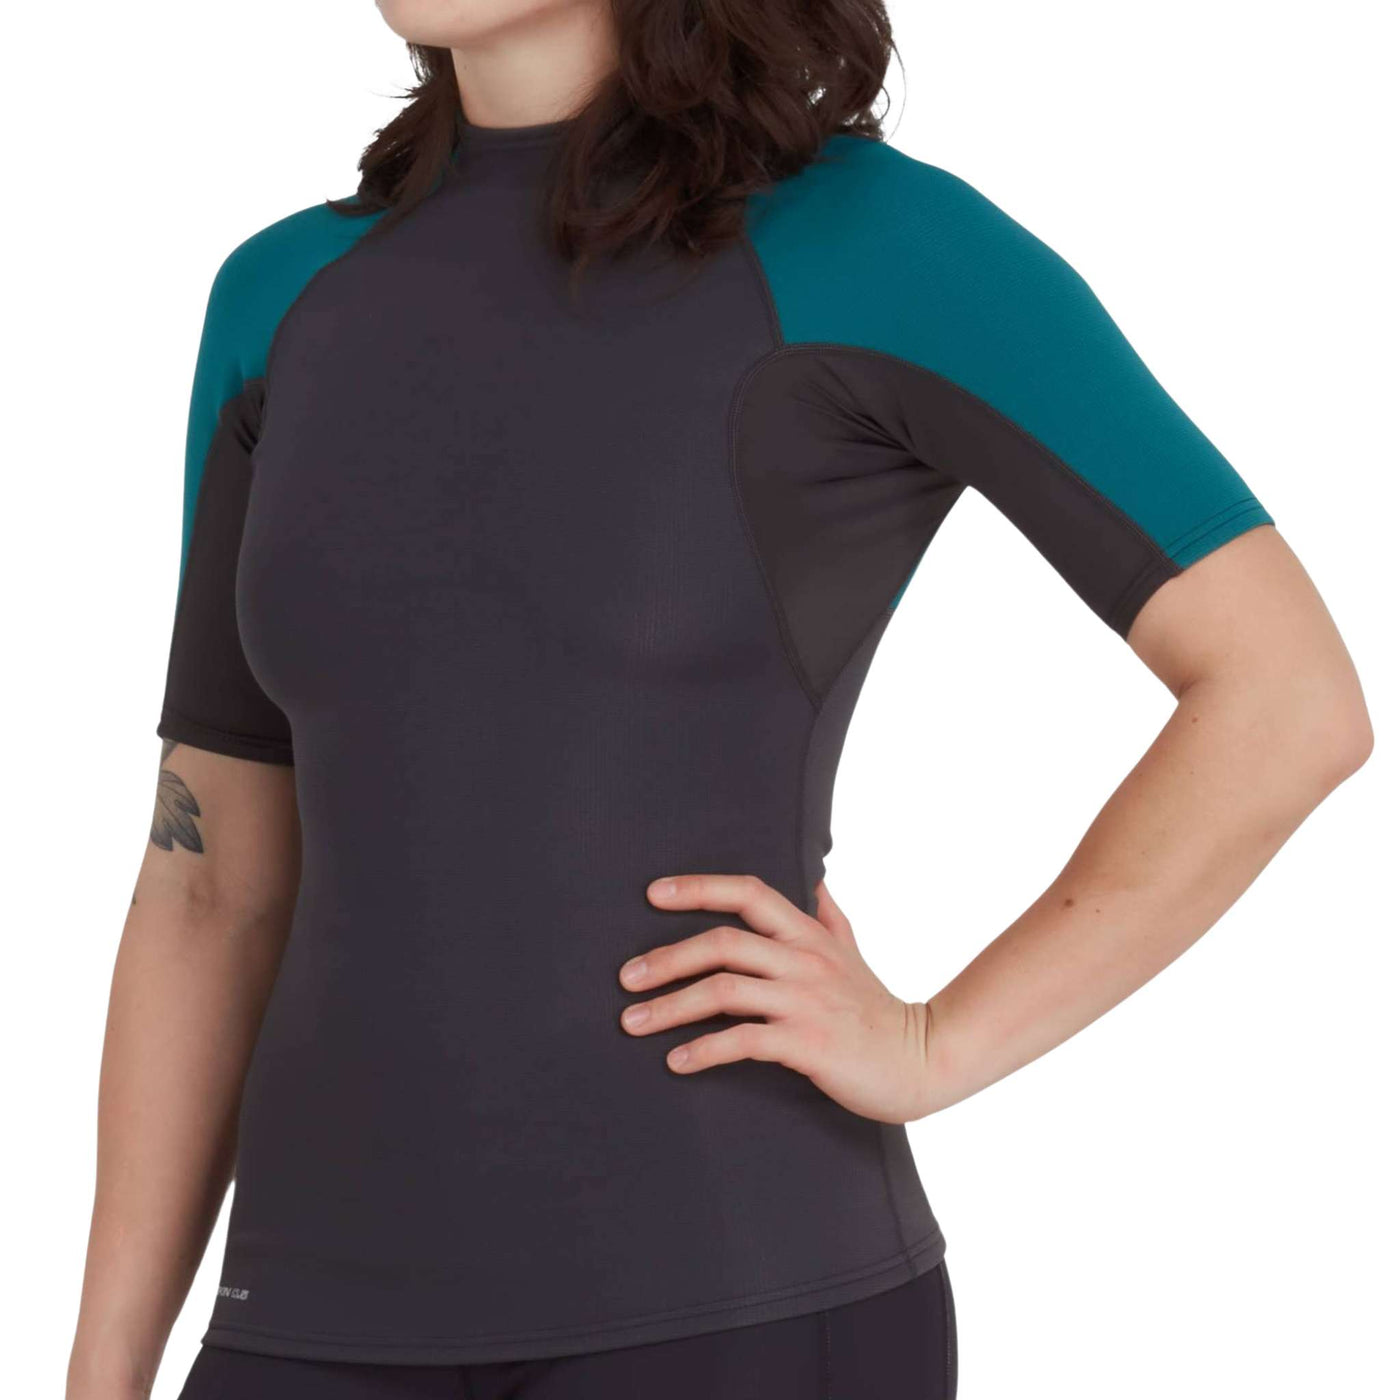 NRS Hydroskin 0.5 Short Sleeve Shirt - Womens | Womens Kayak Clothing | Further Faster Christchurch NZ | #graphite-harbor